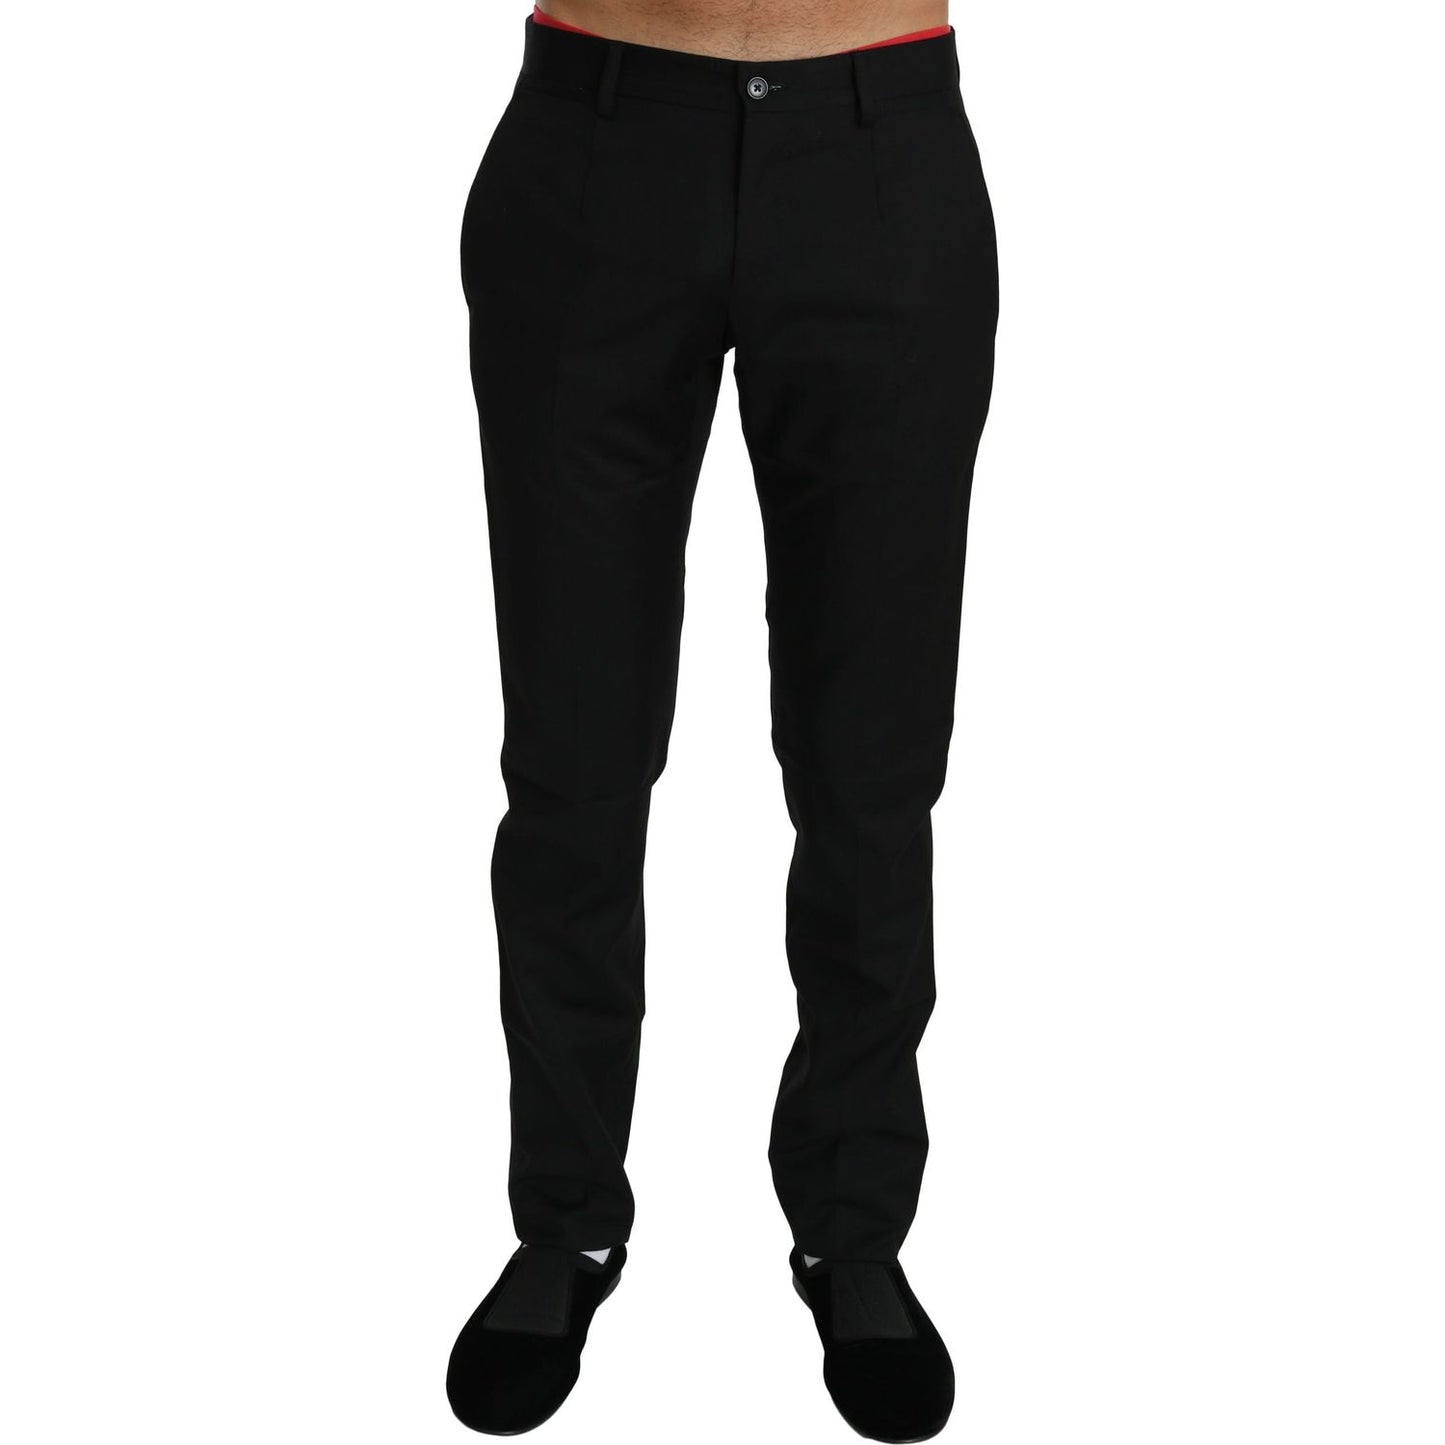 Dolce & Gabbana Elegant Black Wool Dress Pants black-dress-formal-trouser-mens-wool-pants Jeans & Pants IMG_1237-1-scaled-4a076817-1a9.jpg